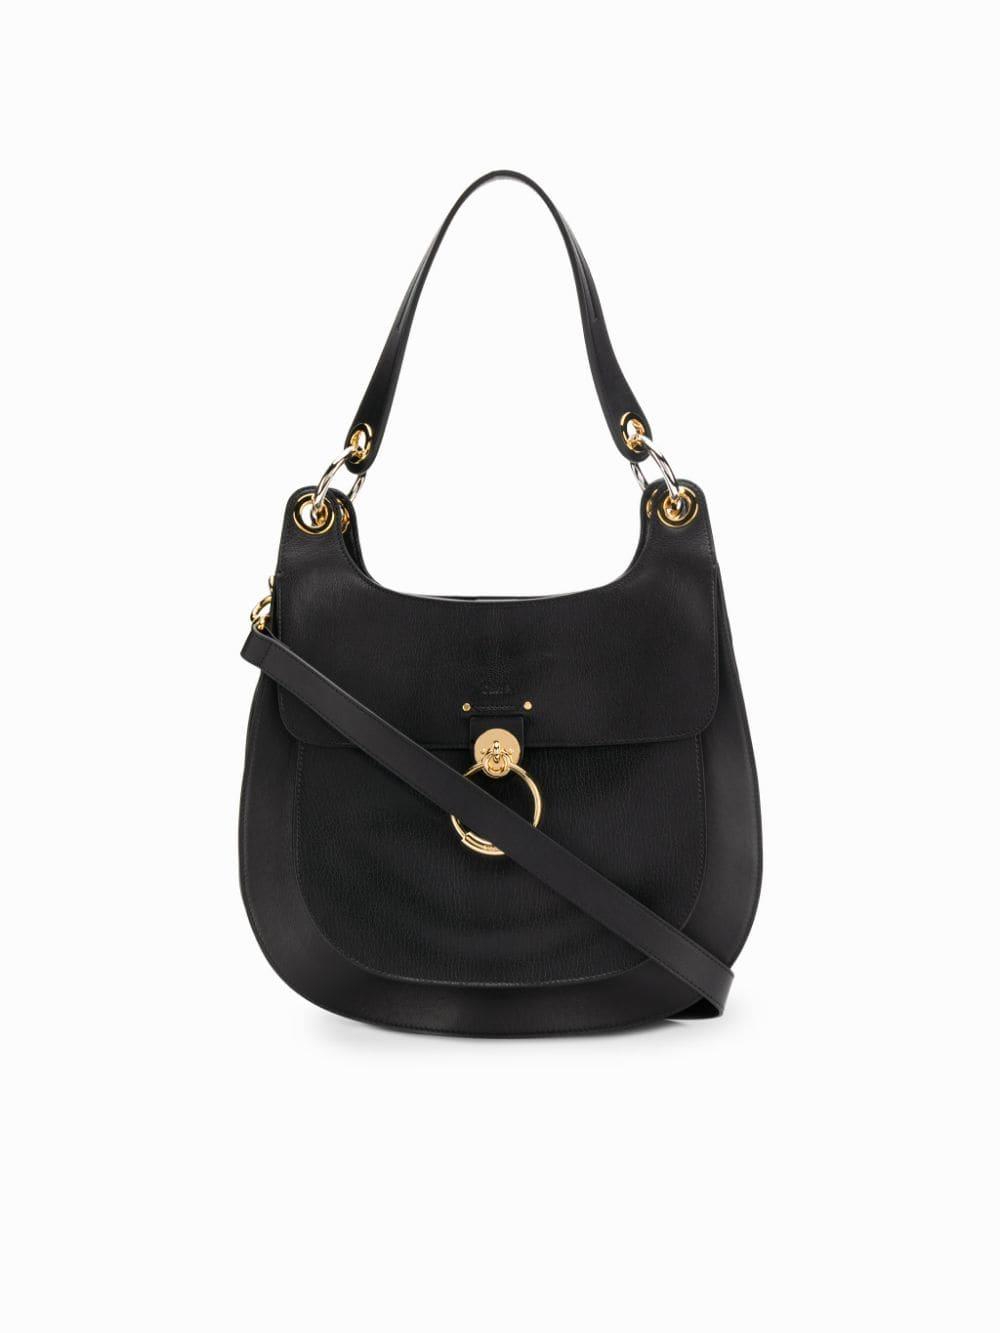 Chloé Leather Tess Hobo Bag in Black | Lyst